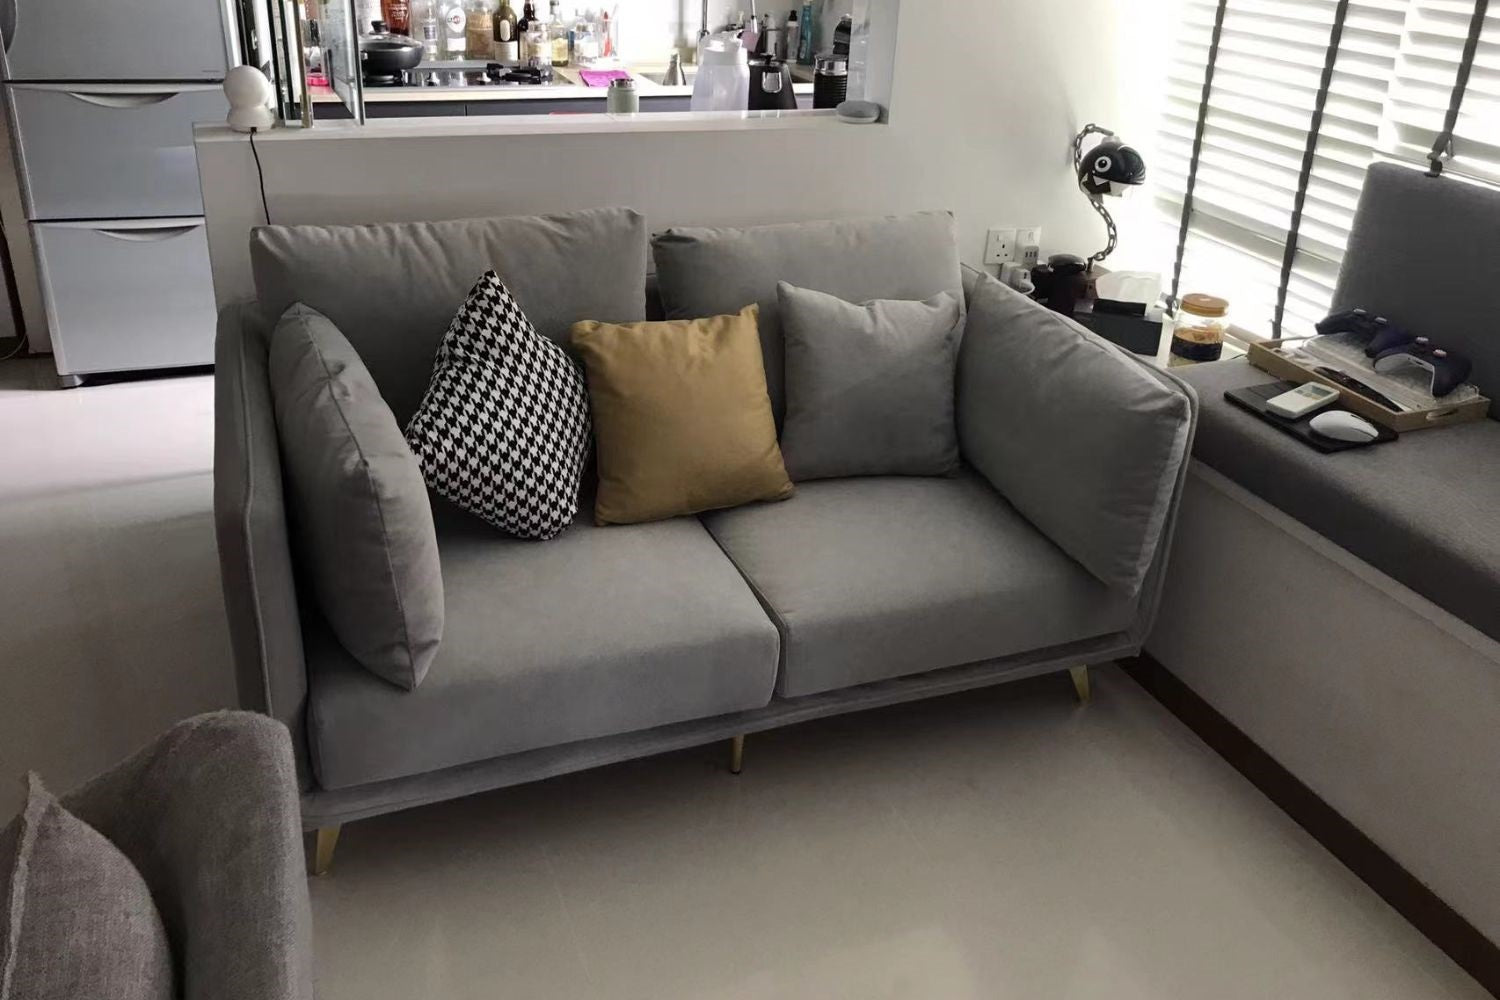 Chris 160cm cozy 2 seater in customer's open concept living room